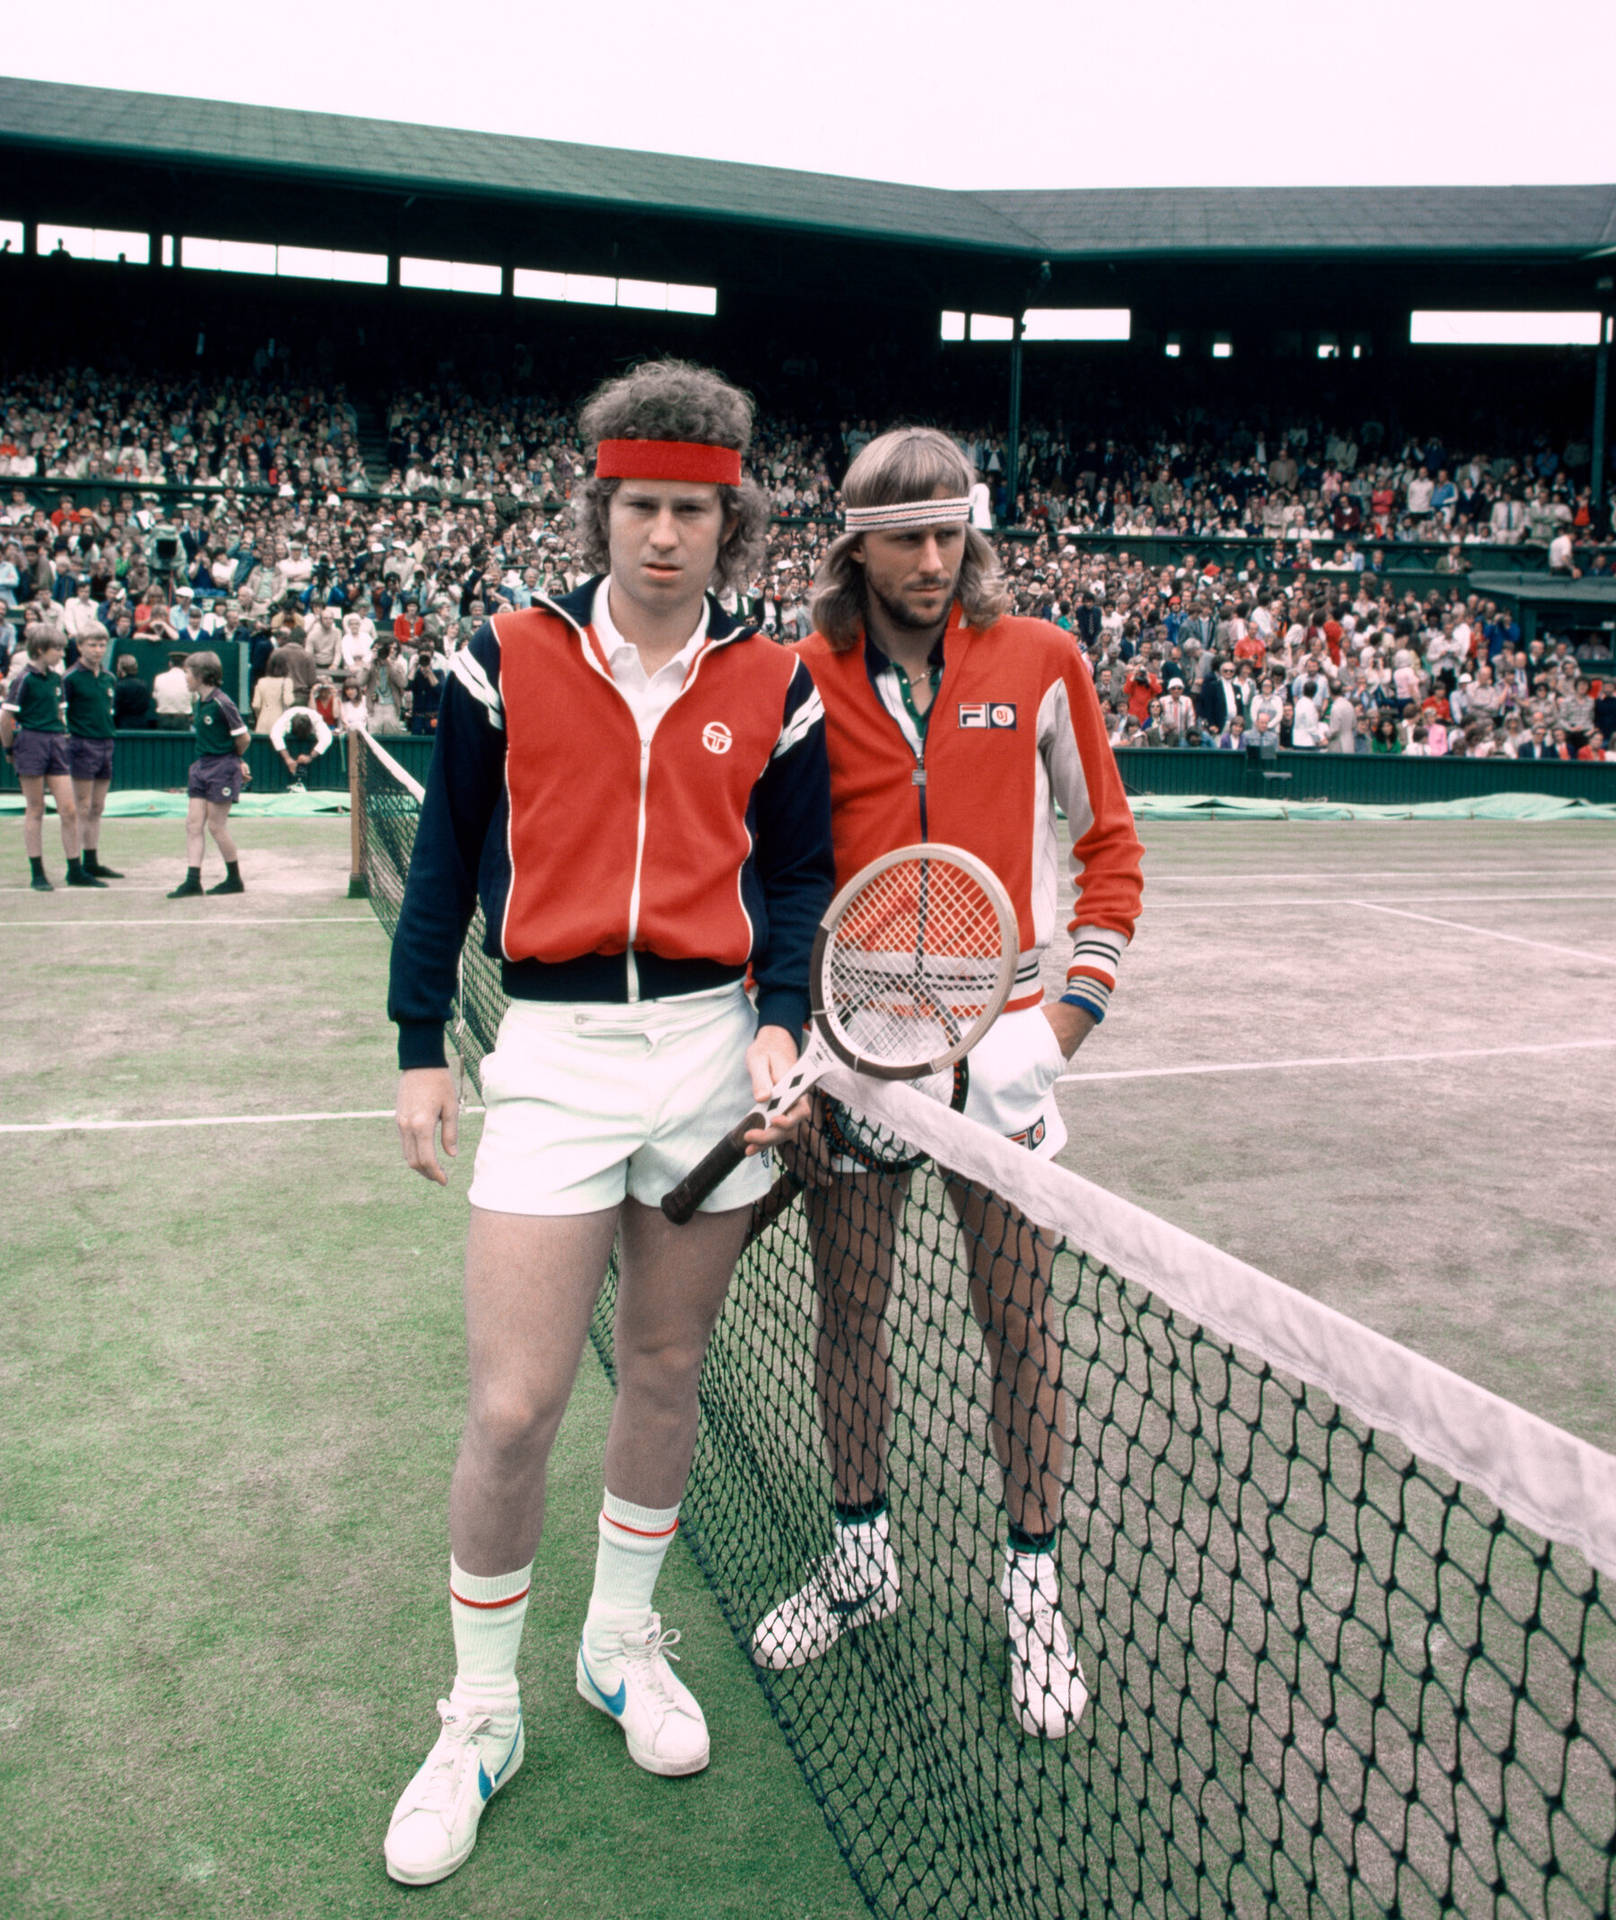 Björn Borg and John McEnroe at the Wimbledon Final in 1980 Wallpaper